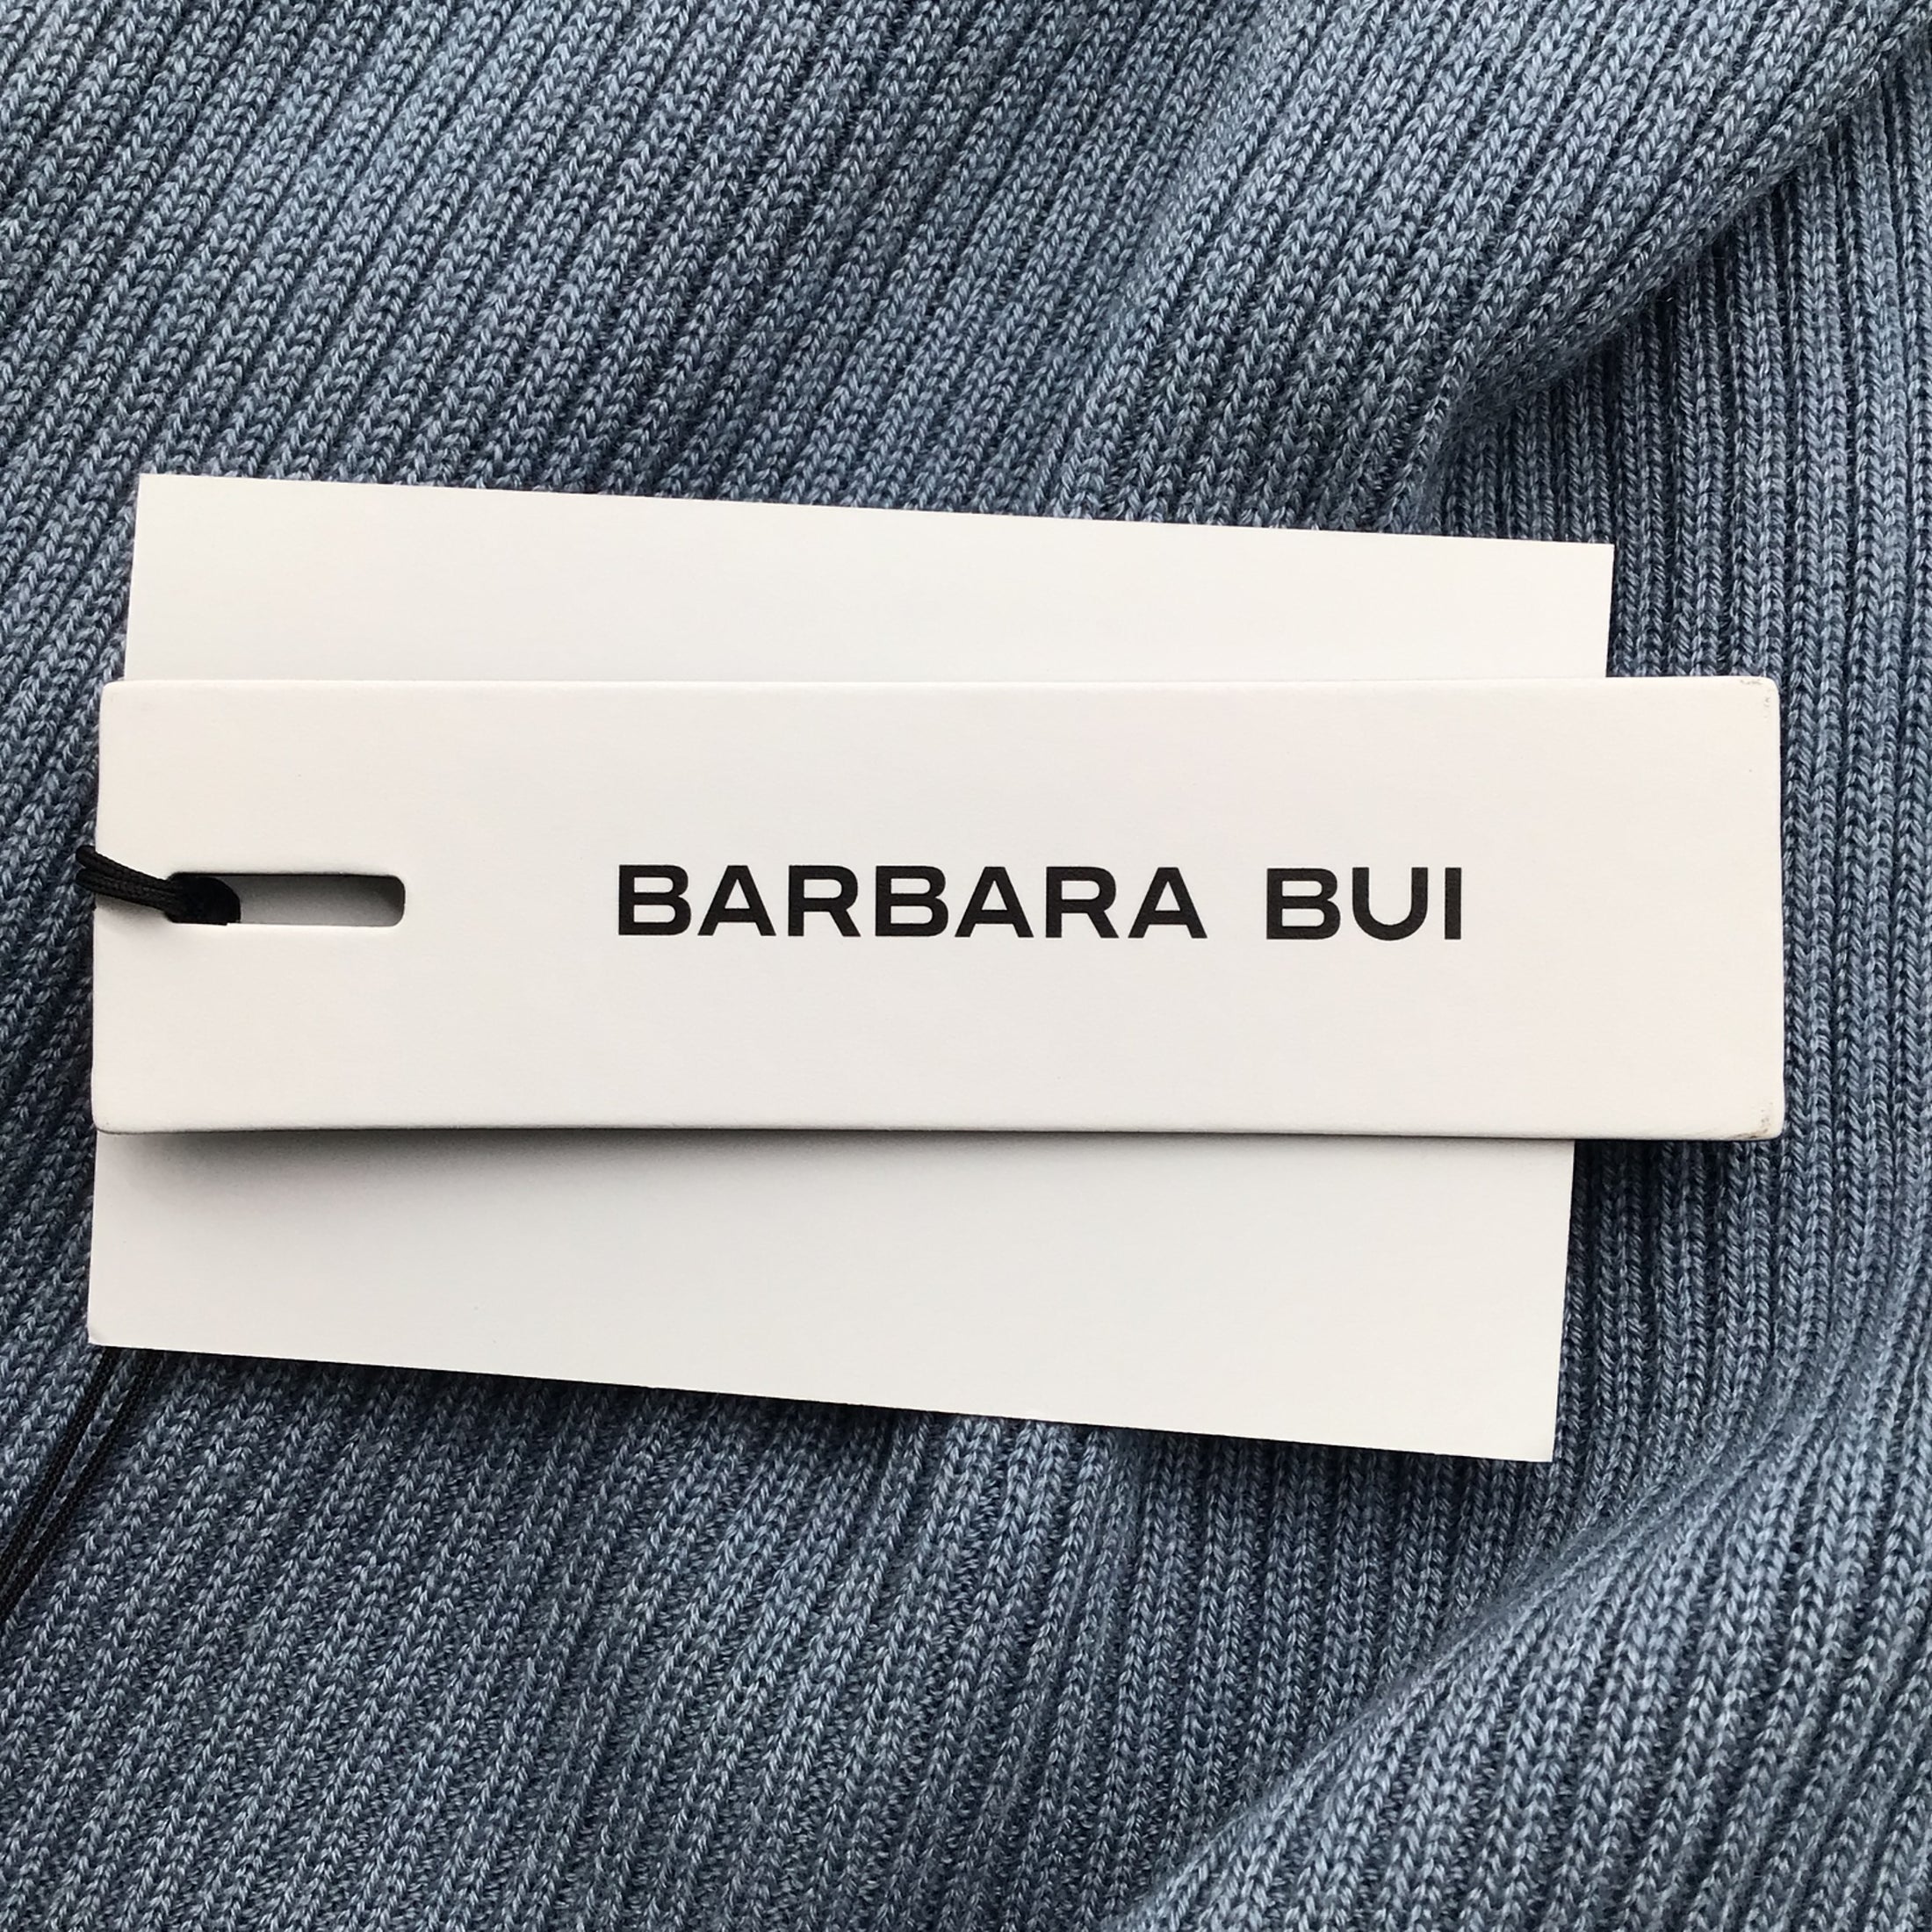 Barbara Bui Light Blue Three-Quarter Sleeved Ribbed Knit Keyhole Sweater